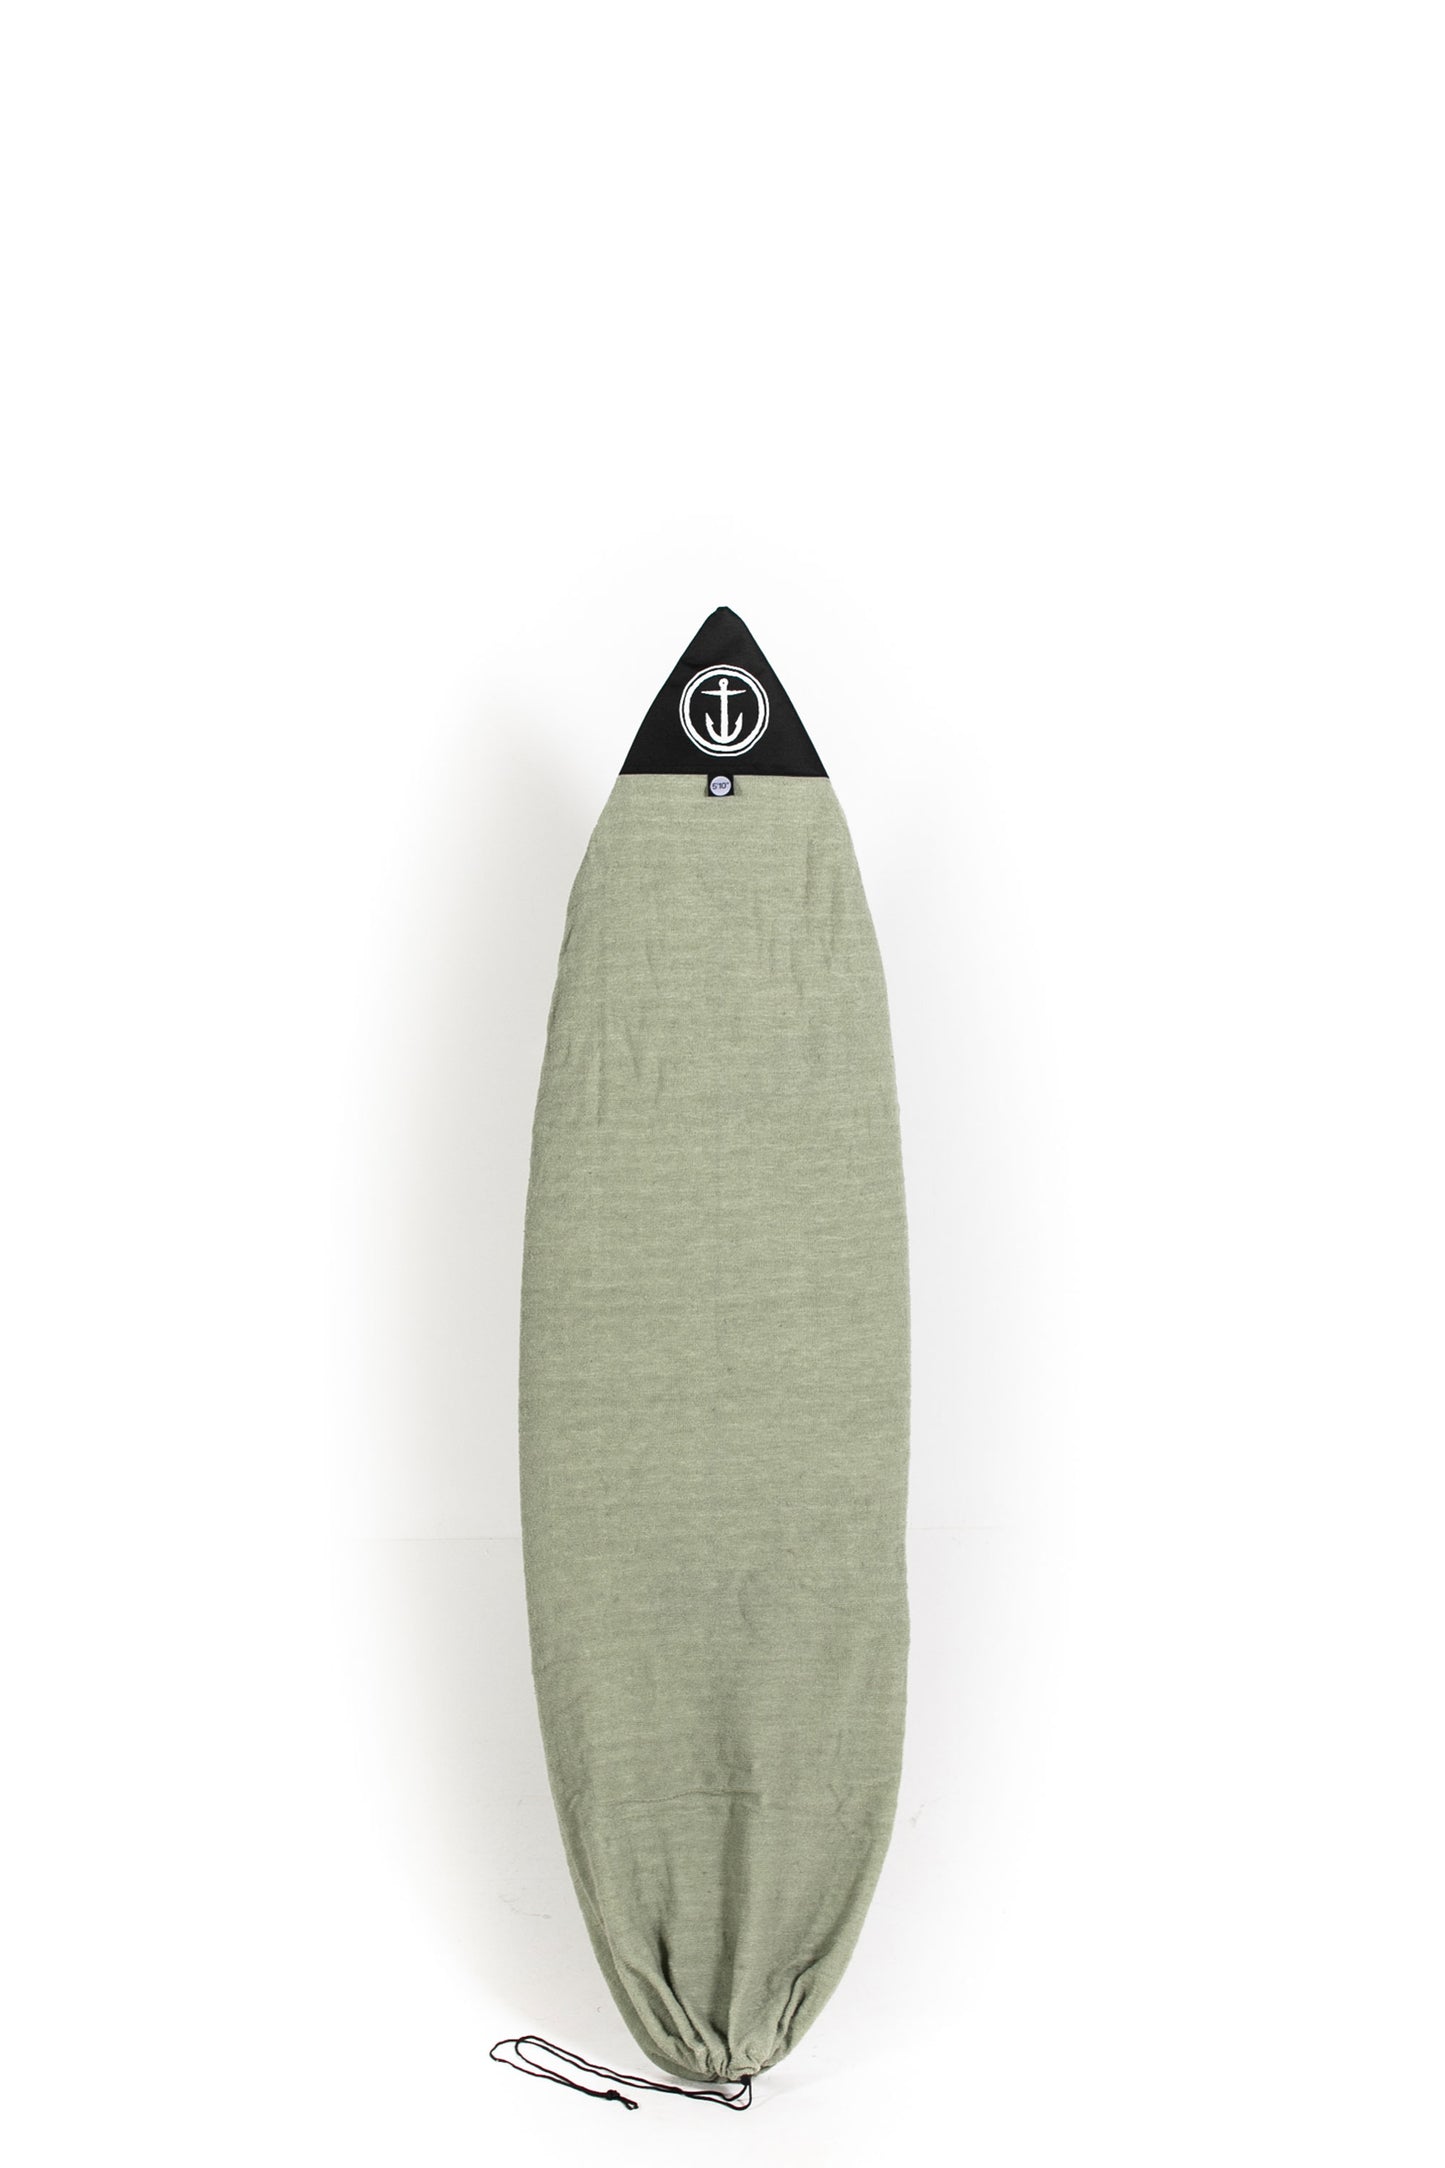 pukas-surf-shop-captain-fin-boardbag-sock-shortboard-lto-6-6